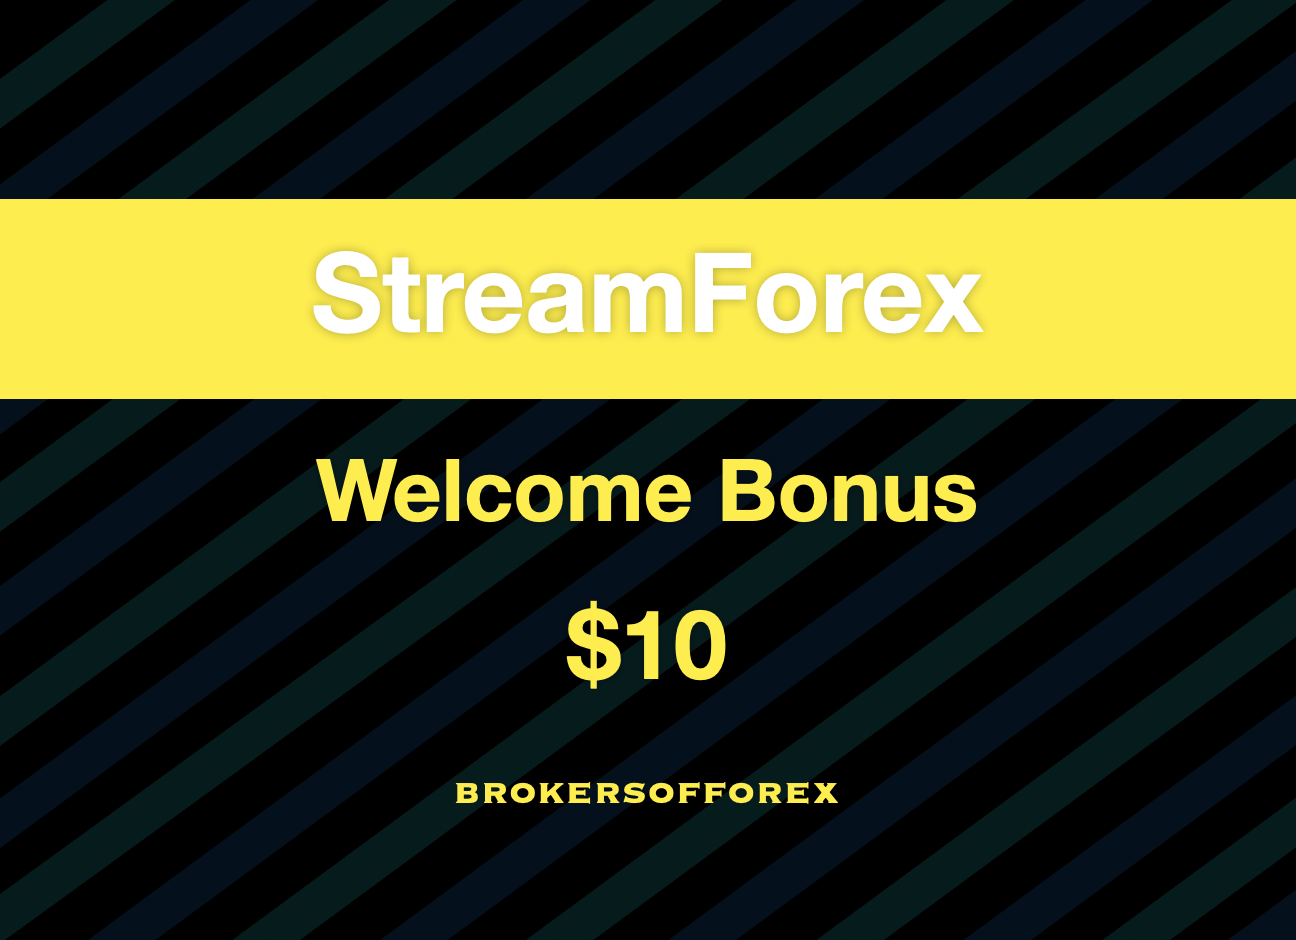 StreamForex Welcome Bonus